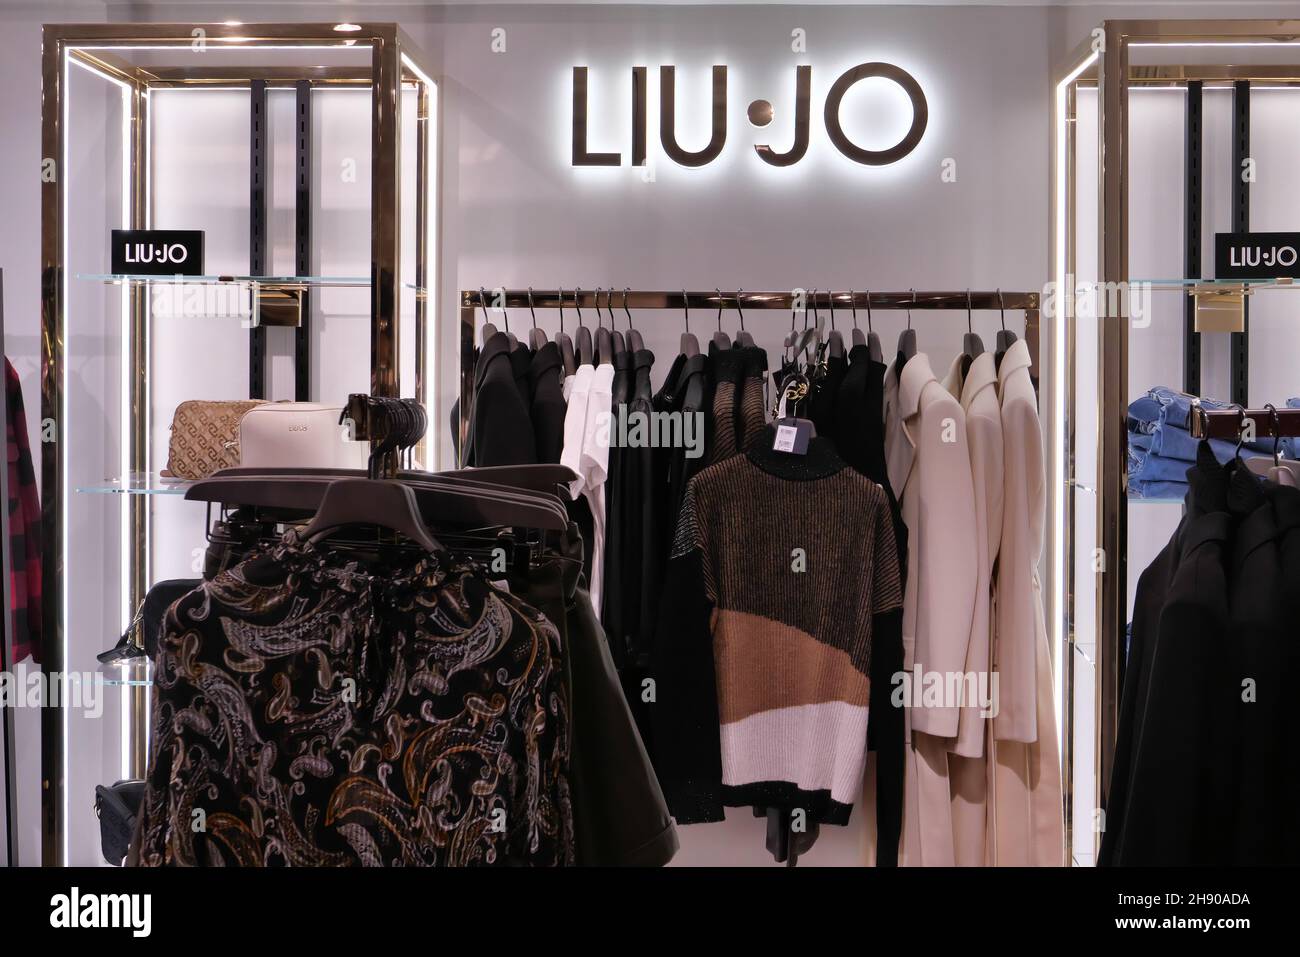 LIU JO CLOTHING ON DISPLAY INSIDE THE FASHION STORE Stock Photo - Alamy